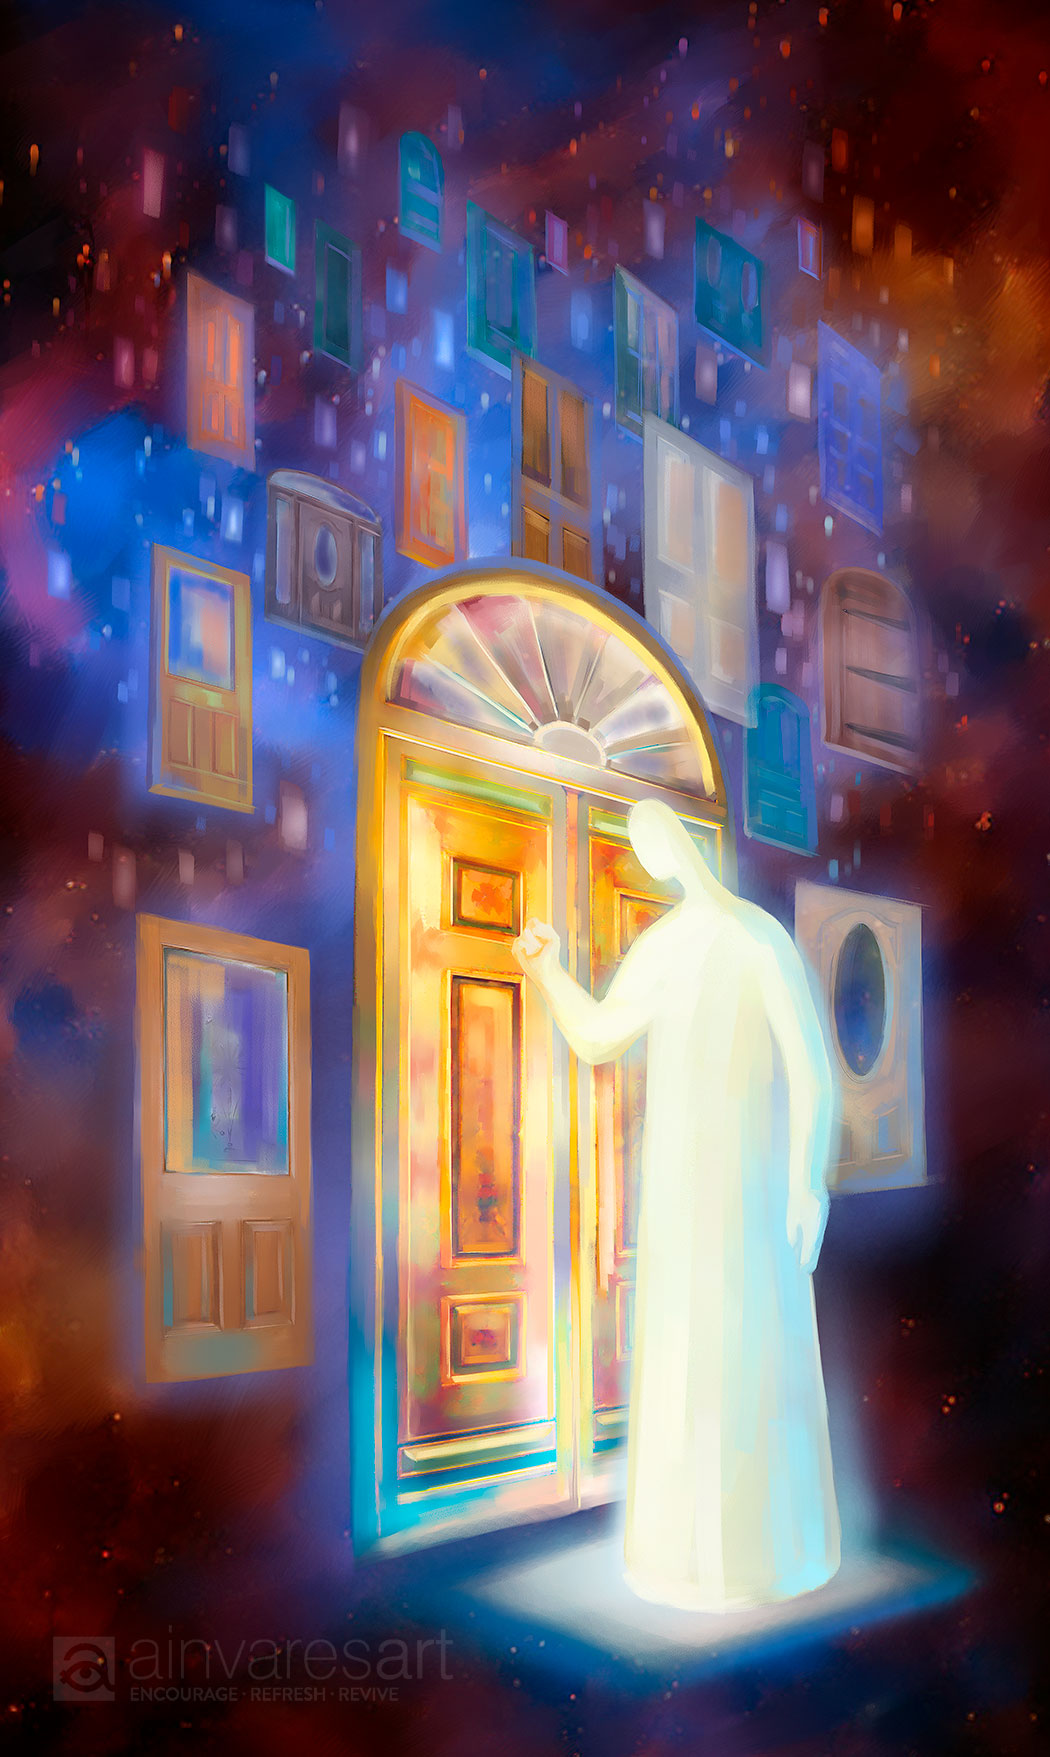 Art print - Jesus stands at the door and knocks, Revelation 3:20 - Ain Vares Art